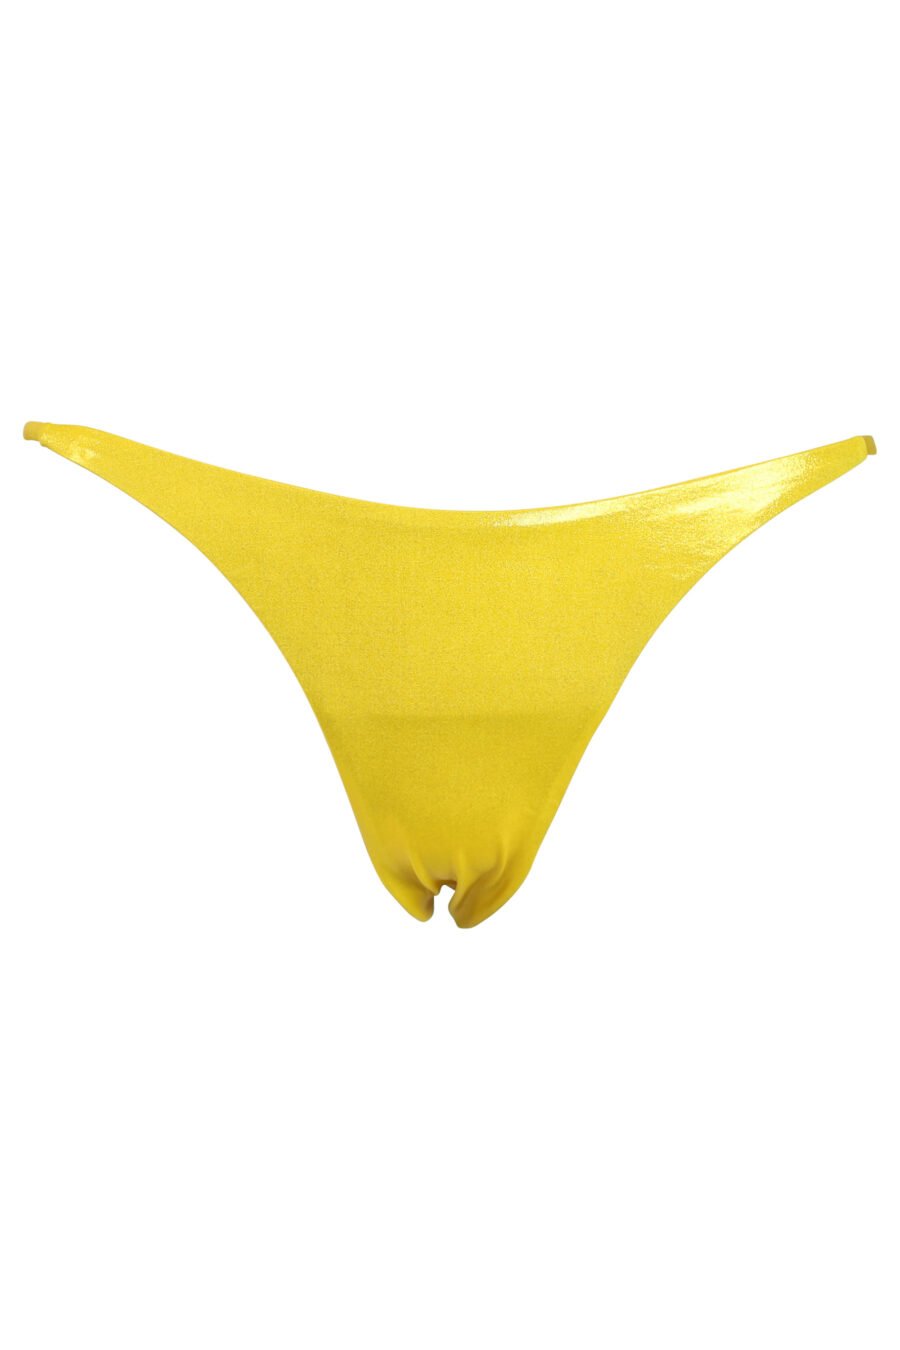 Bright yellow bikini bottoms with side tie - 889316269680